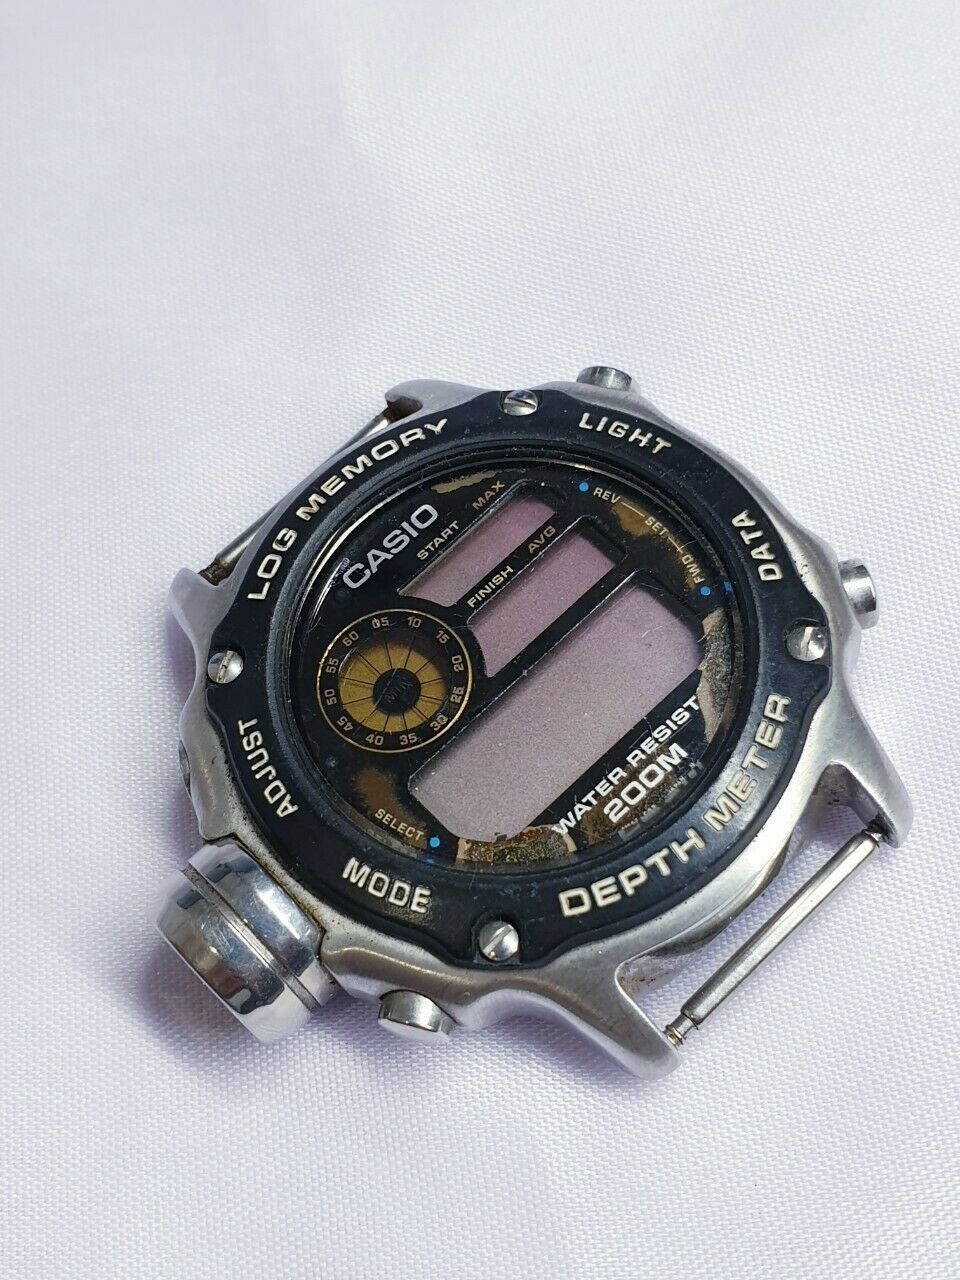 Casio DEP-510 Depth Meter Air Diver Module 982 / 1994 Japan Made/ Fully  Tested